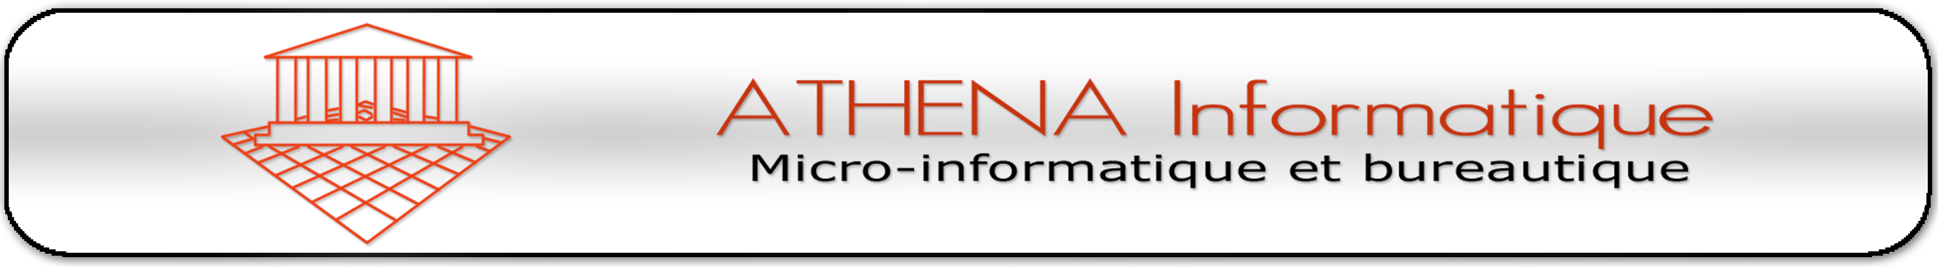 ATHENA Informatique